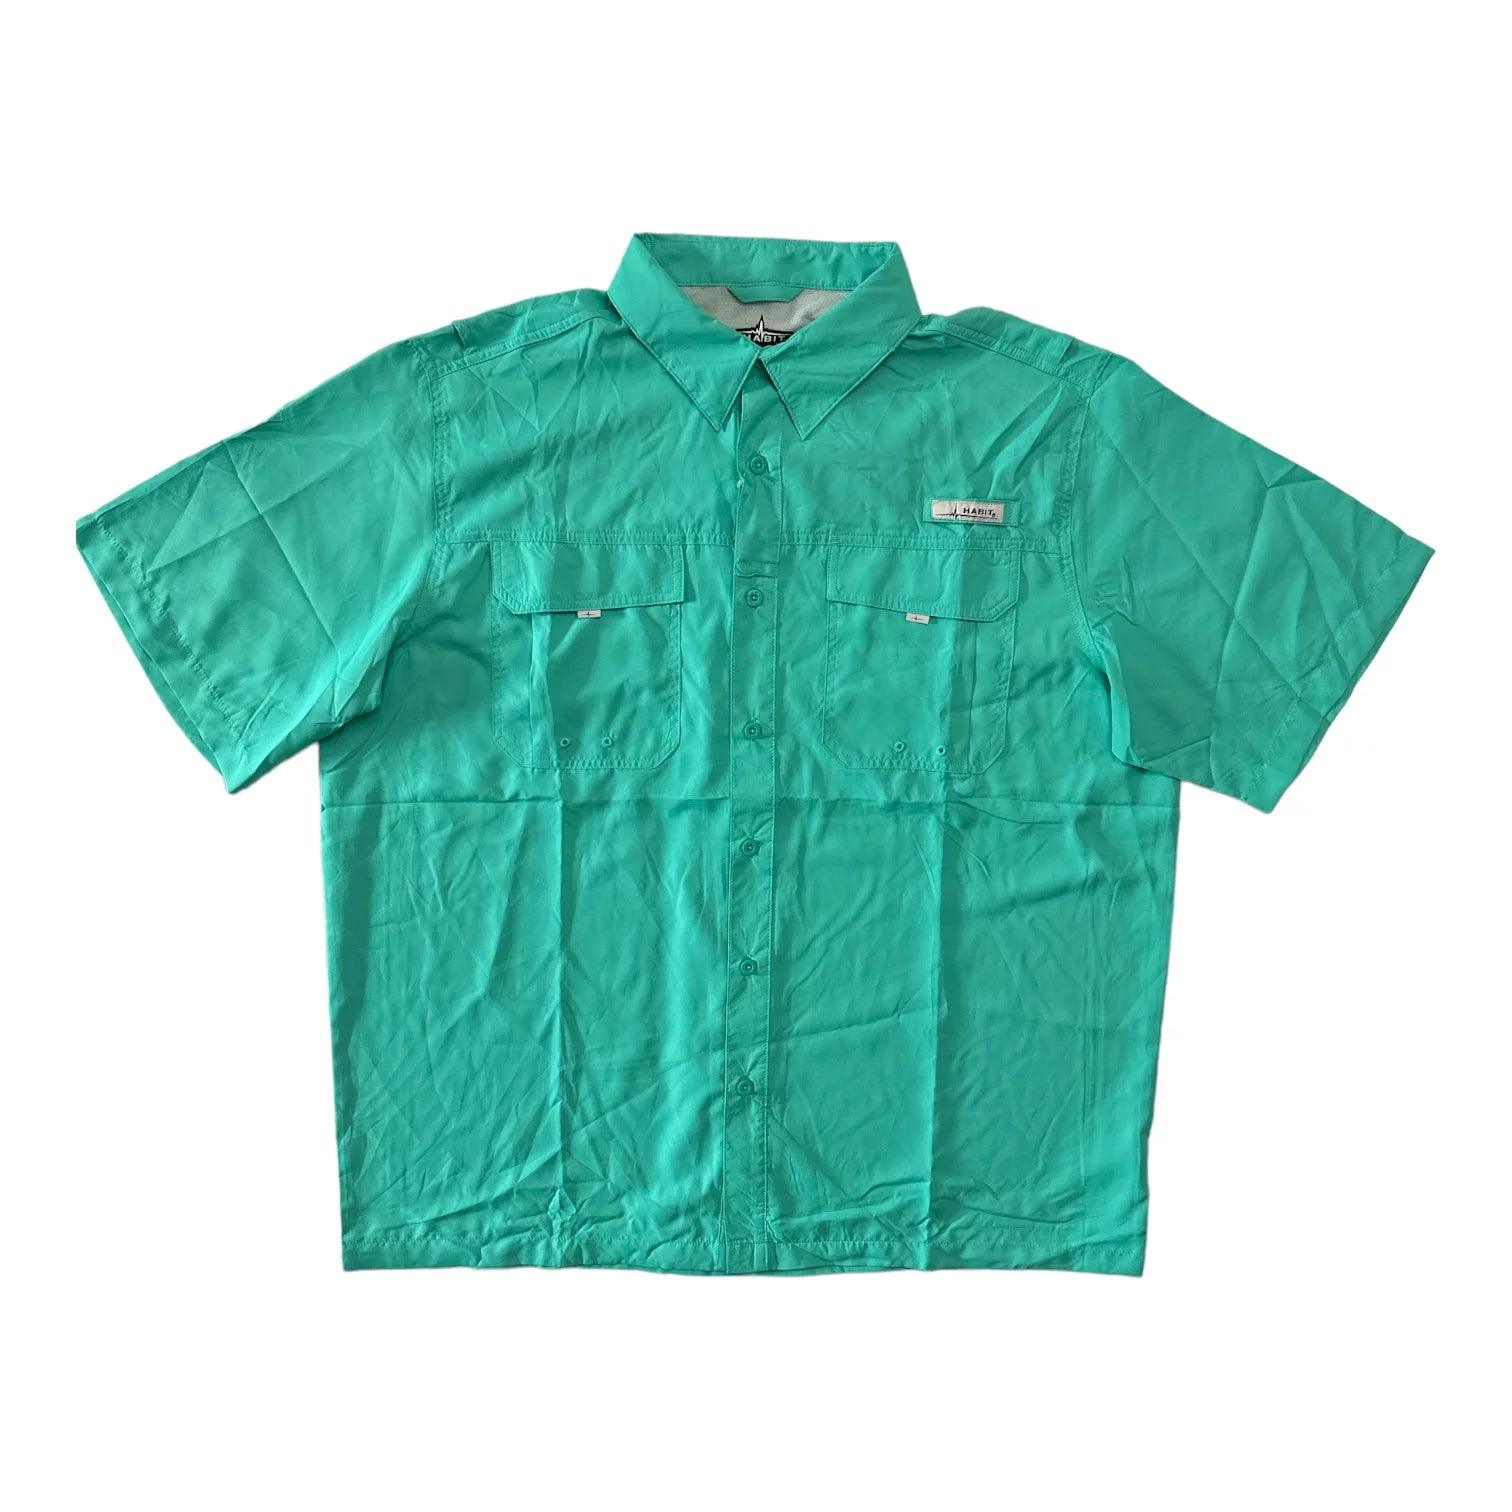 Habit Men's Short Sleeve Vented Fishing Shirt - Grovano